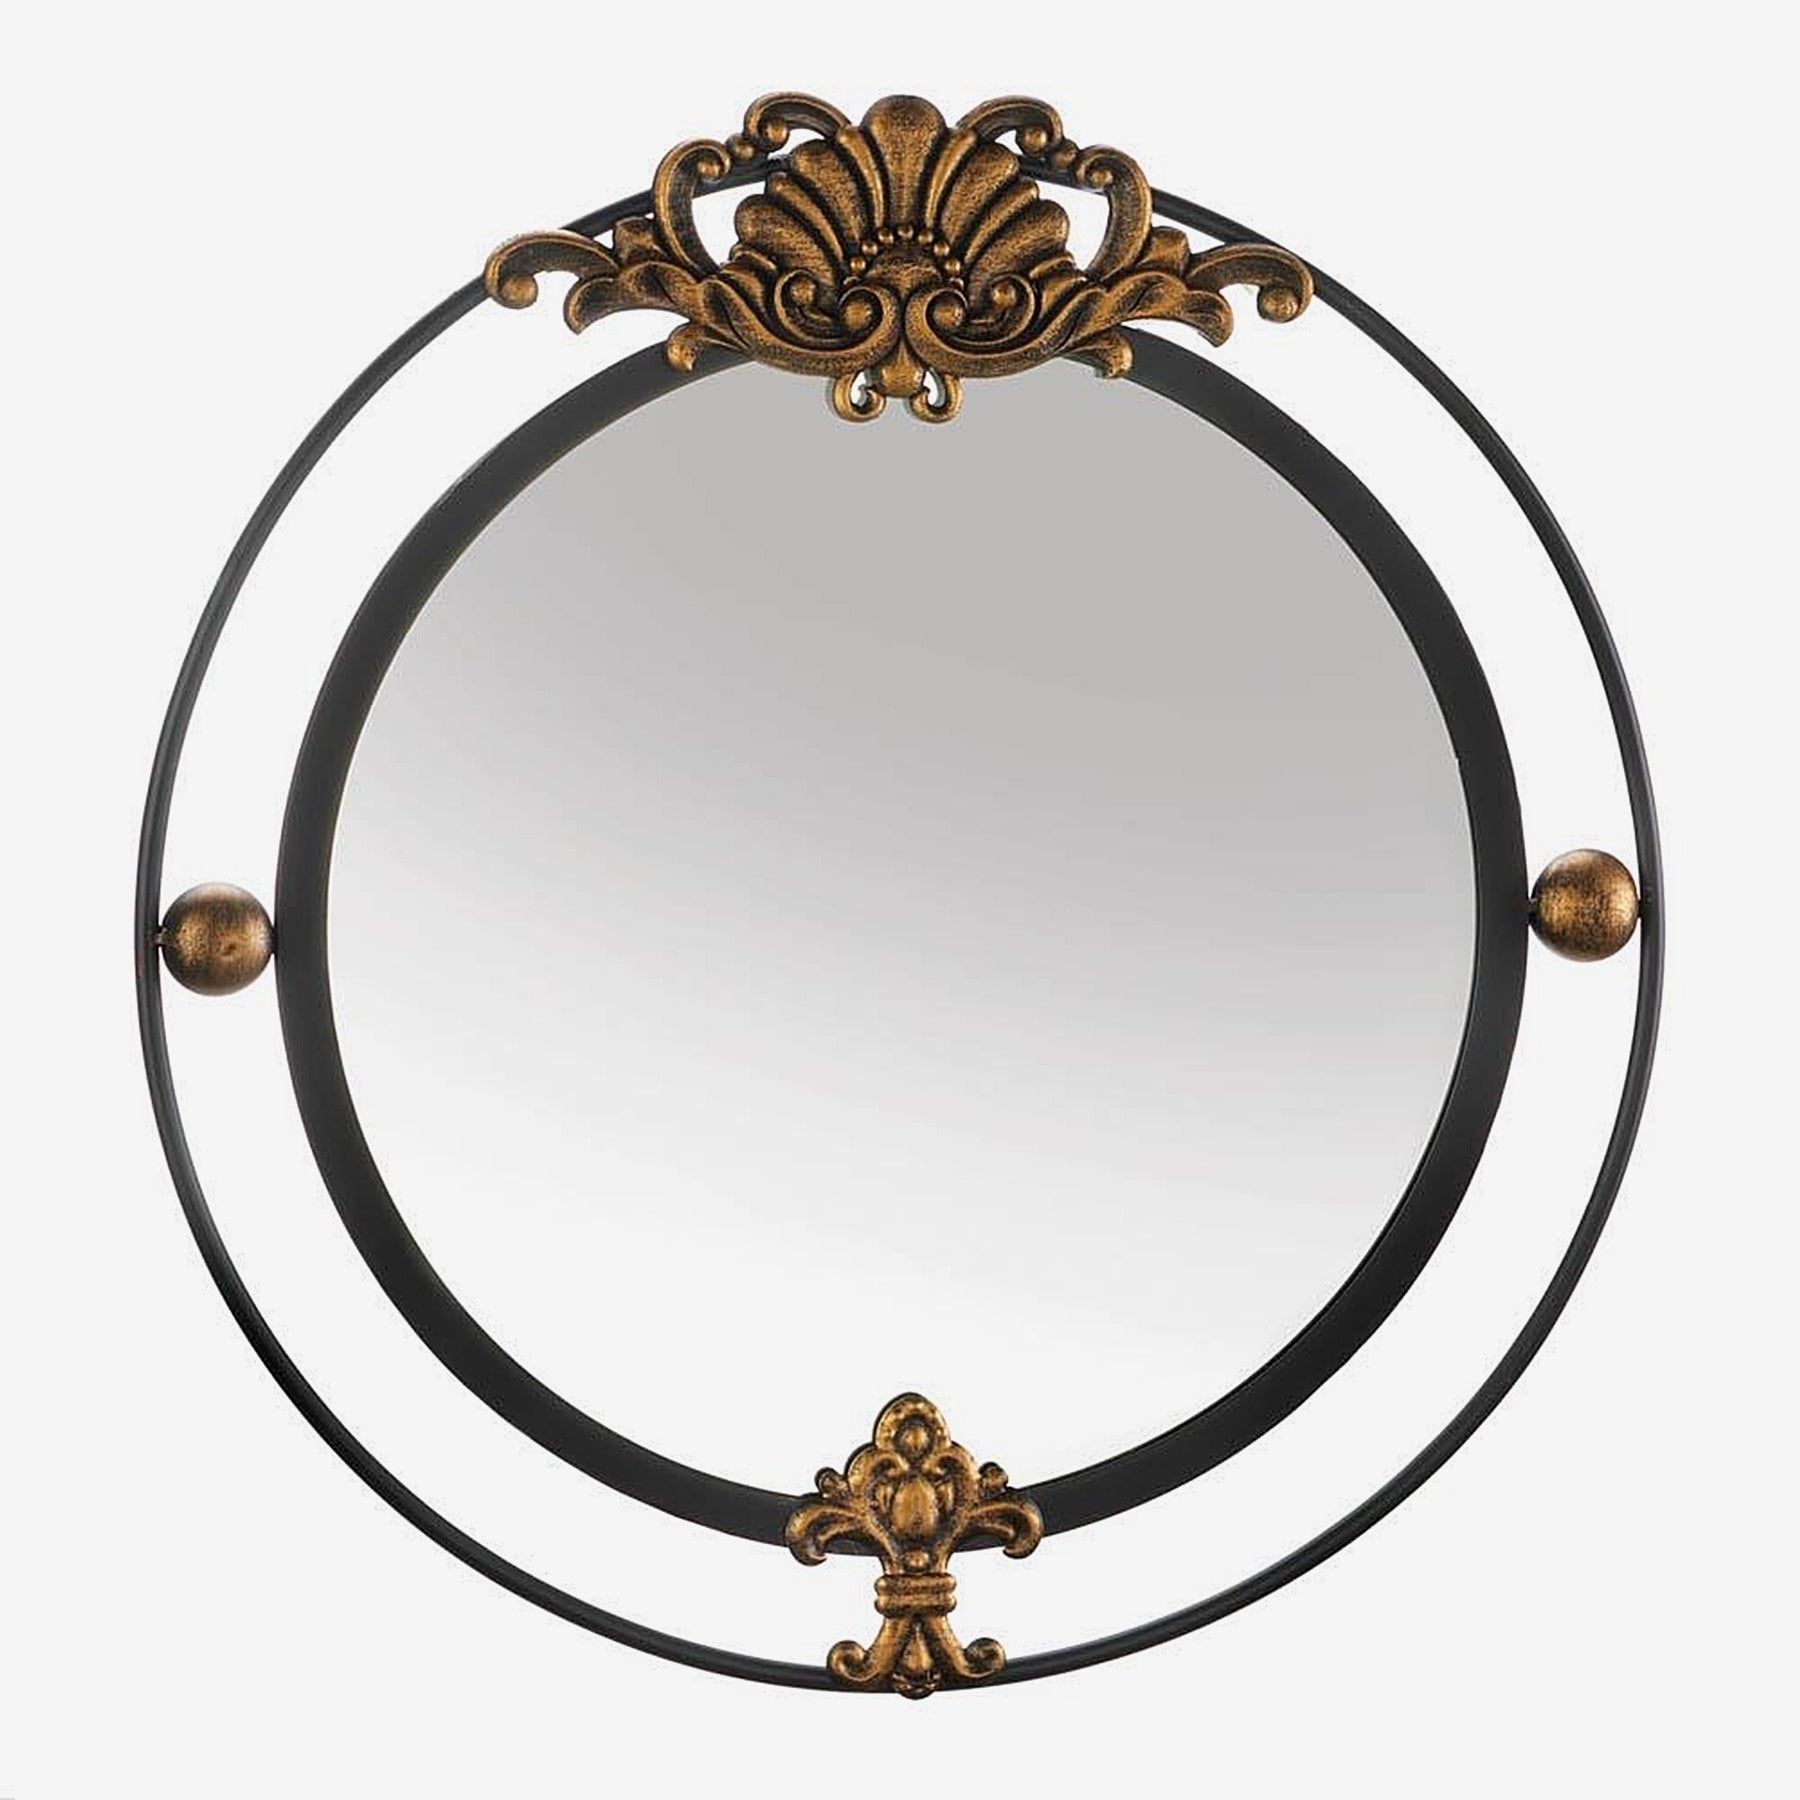 Garfield Decorative Round Wall Mirror – Black/gold Throughout Most Current Decorative Round Wall Mirrors (View 17 of 20)